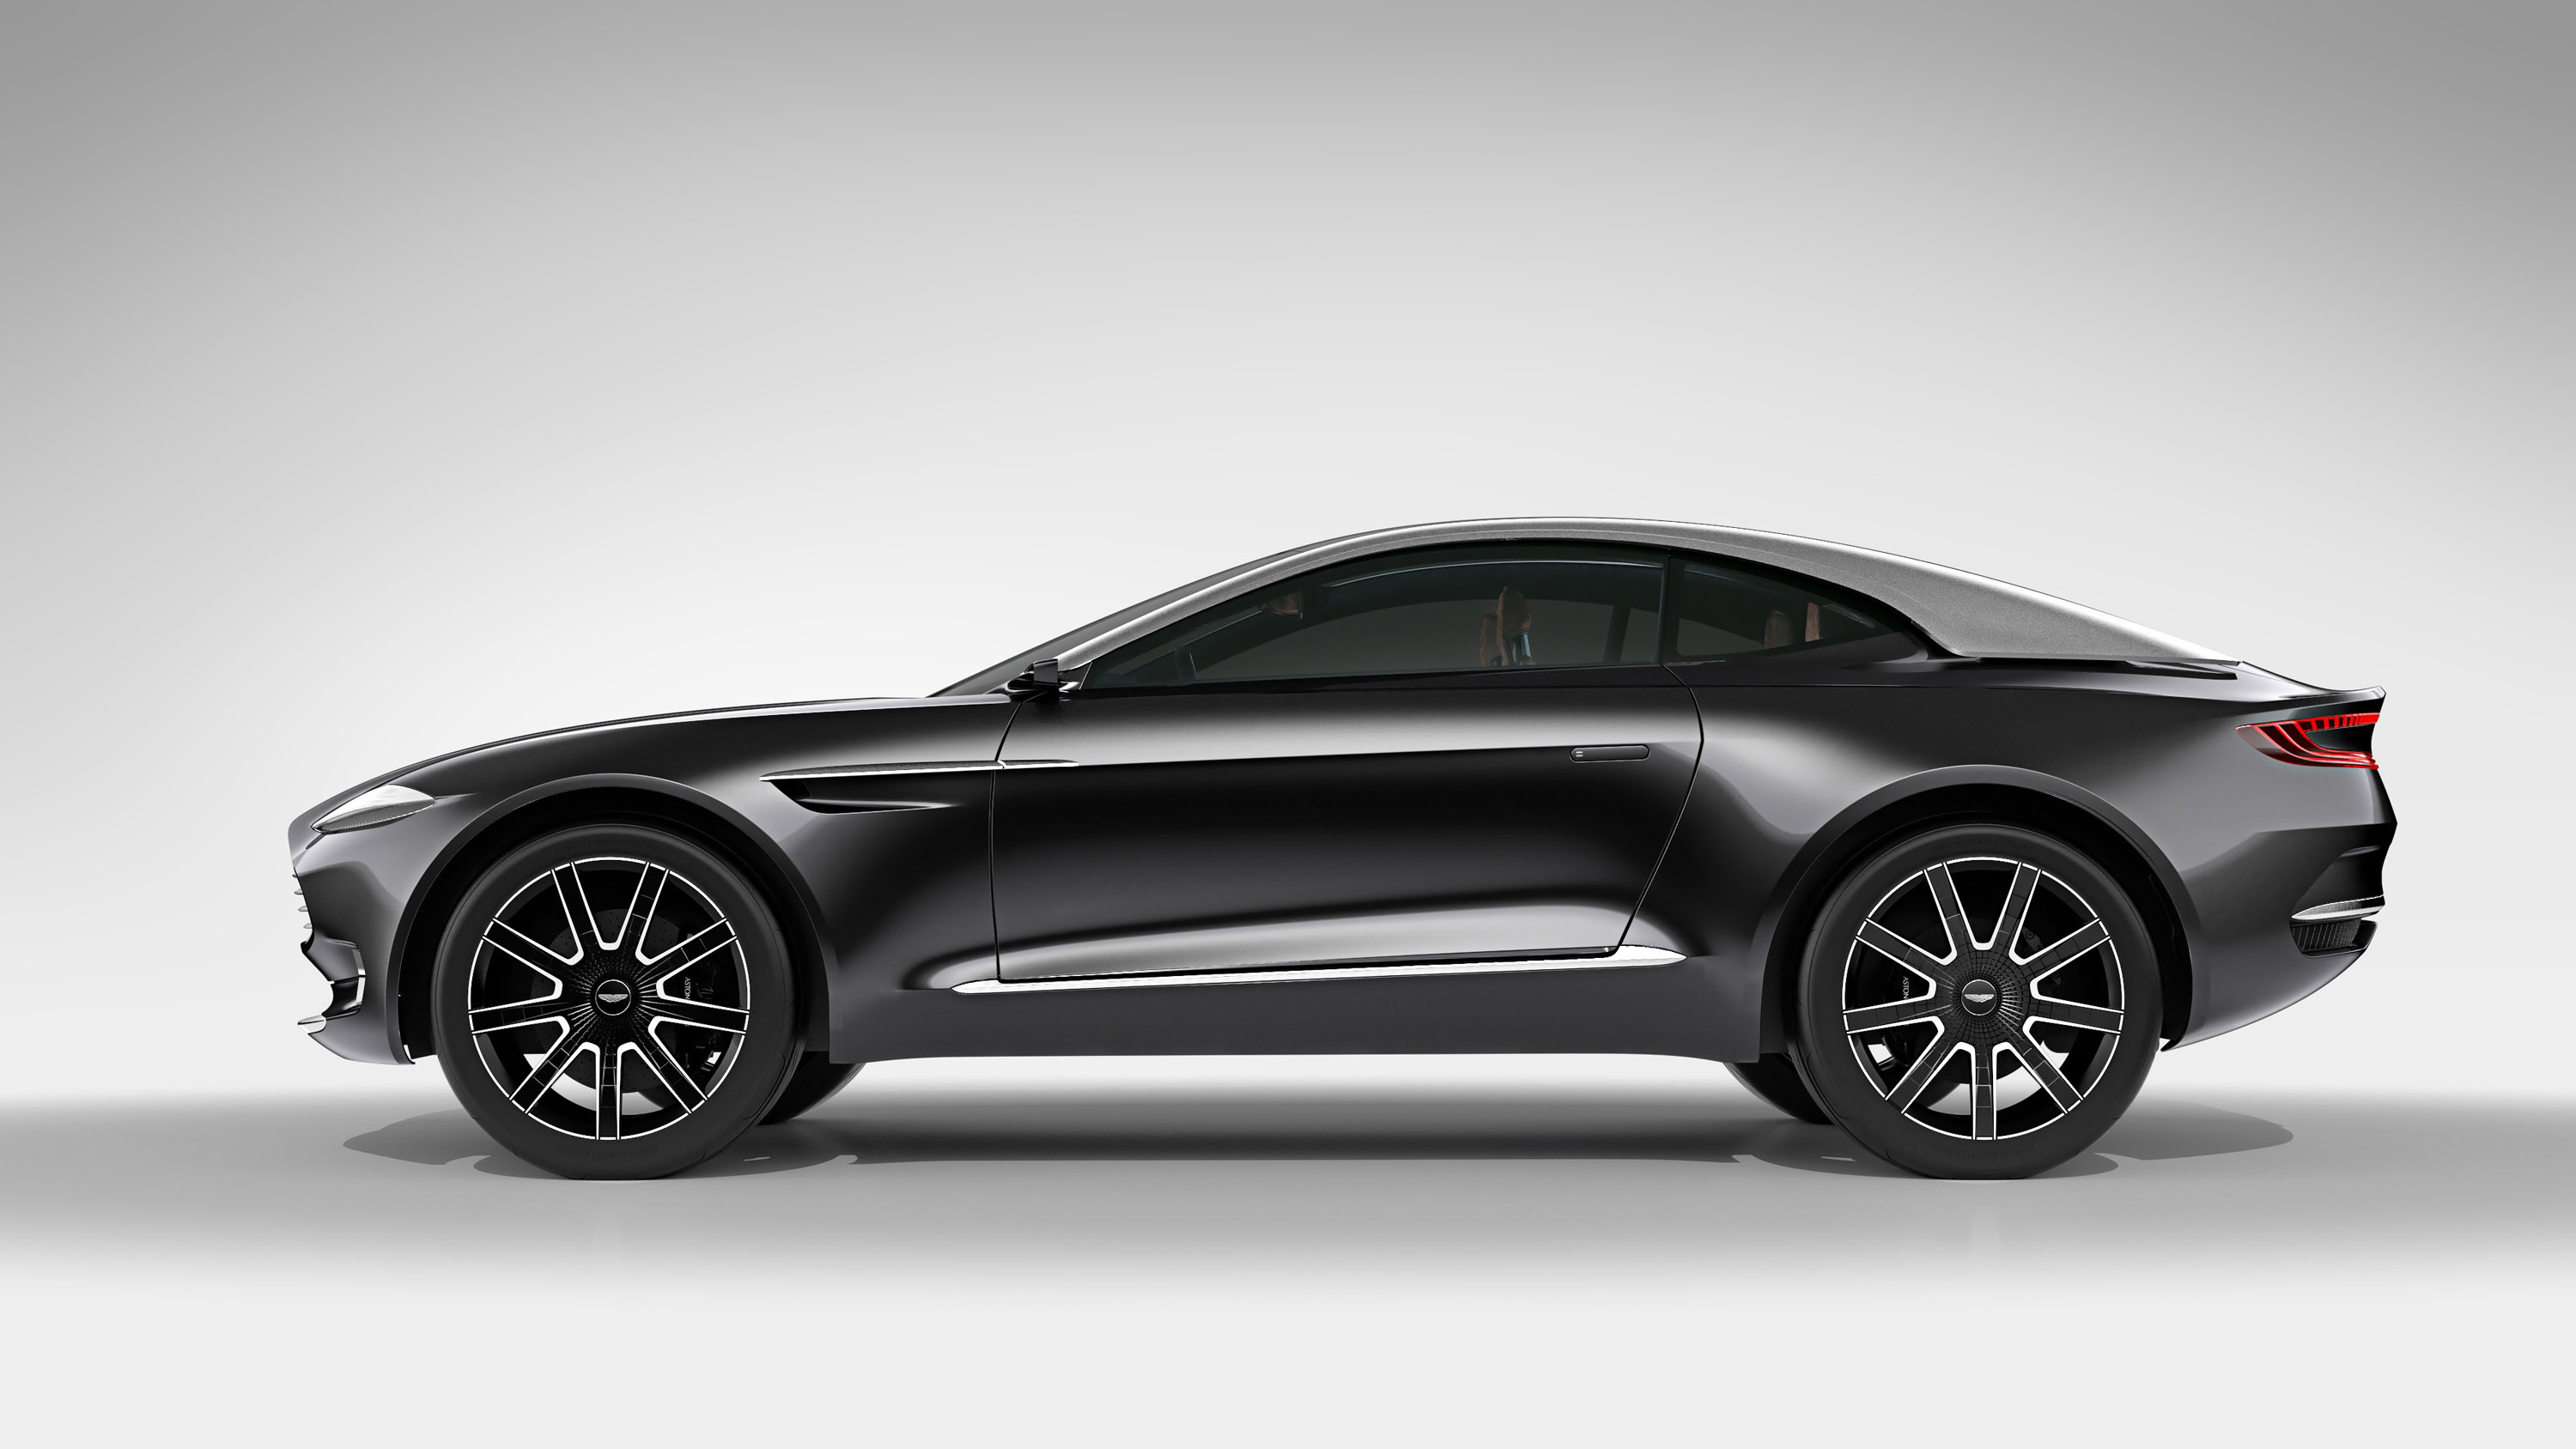 Unparallele
d Luxury: The Aston Martin DBX Concept